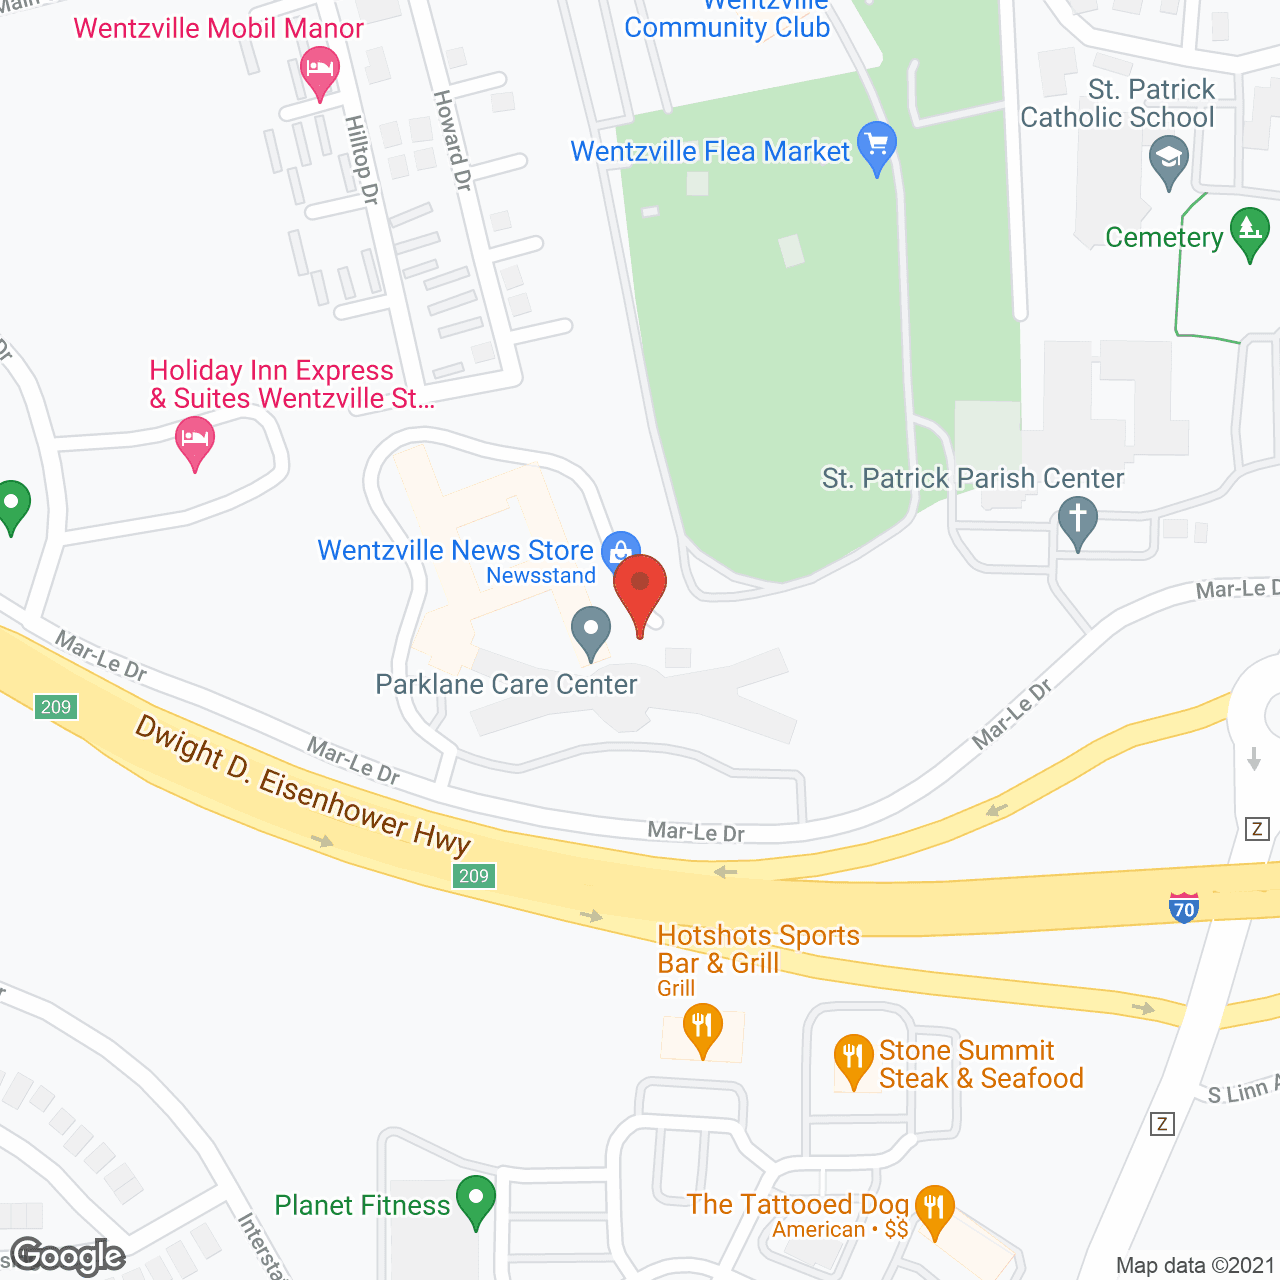 Parklane Care Center in google map